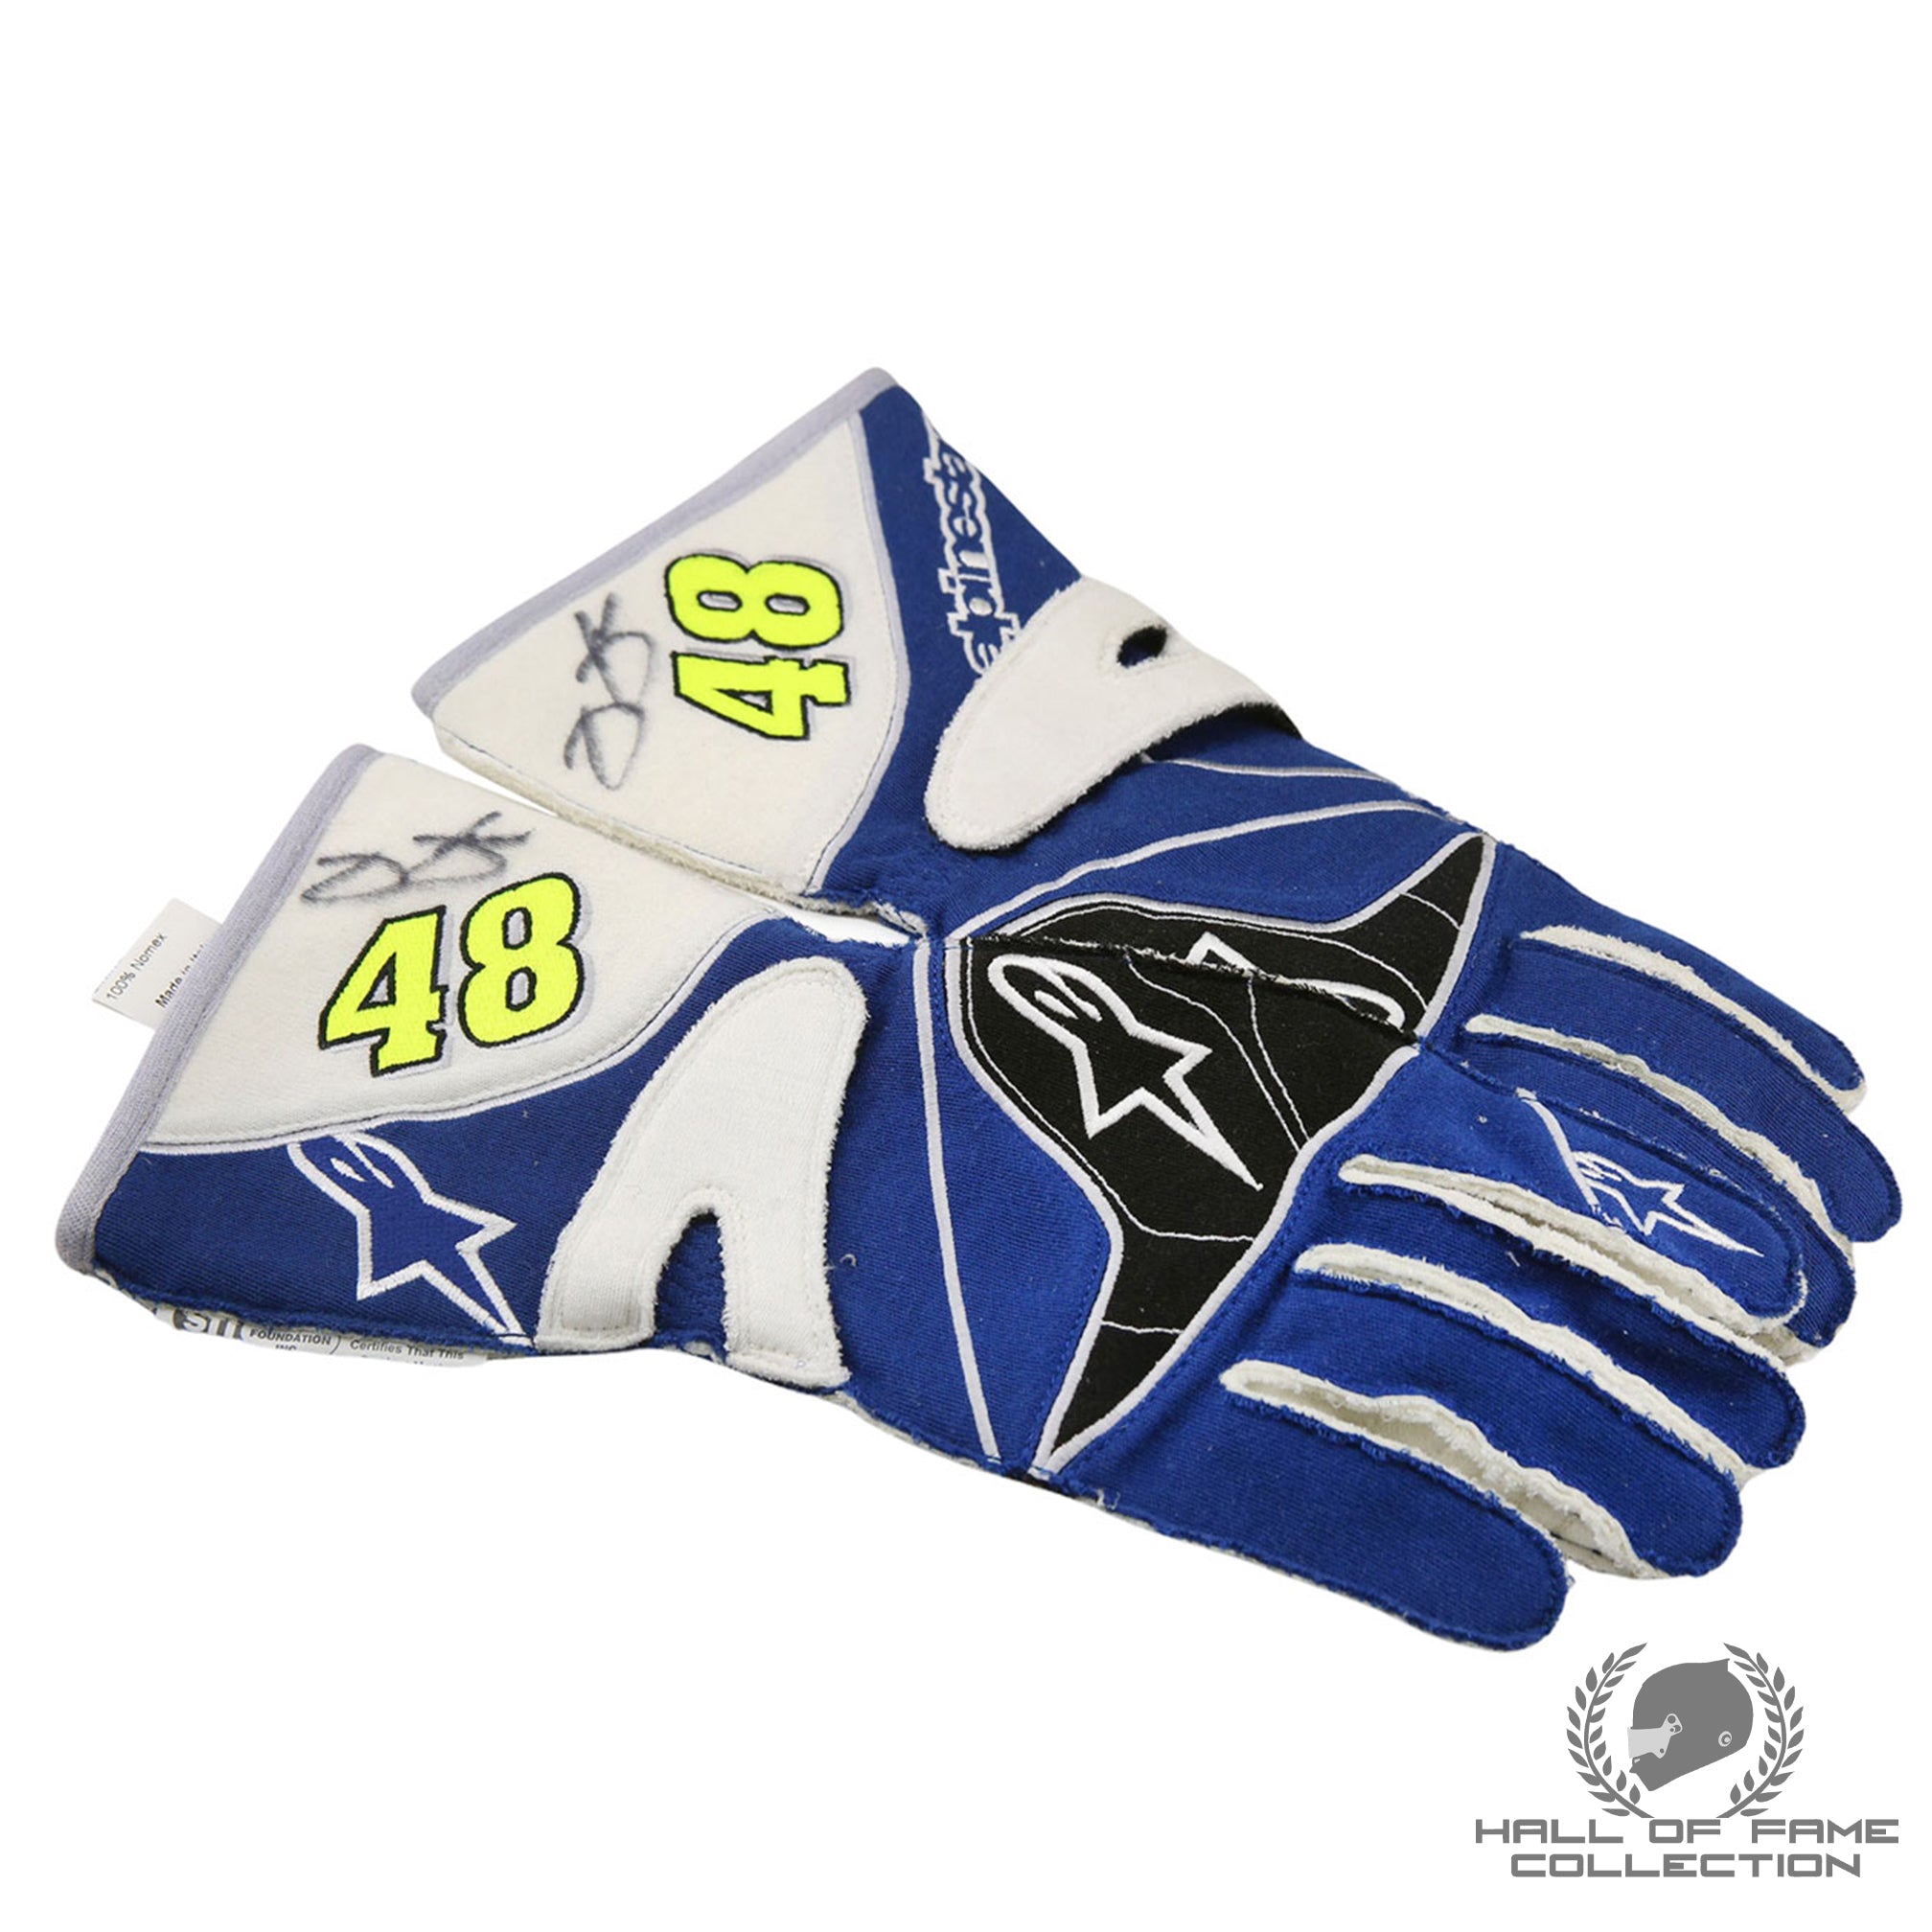 2016 Jimmie Johnson Signed Race Used Hendrick Motorsports Nascar Gloves